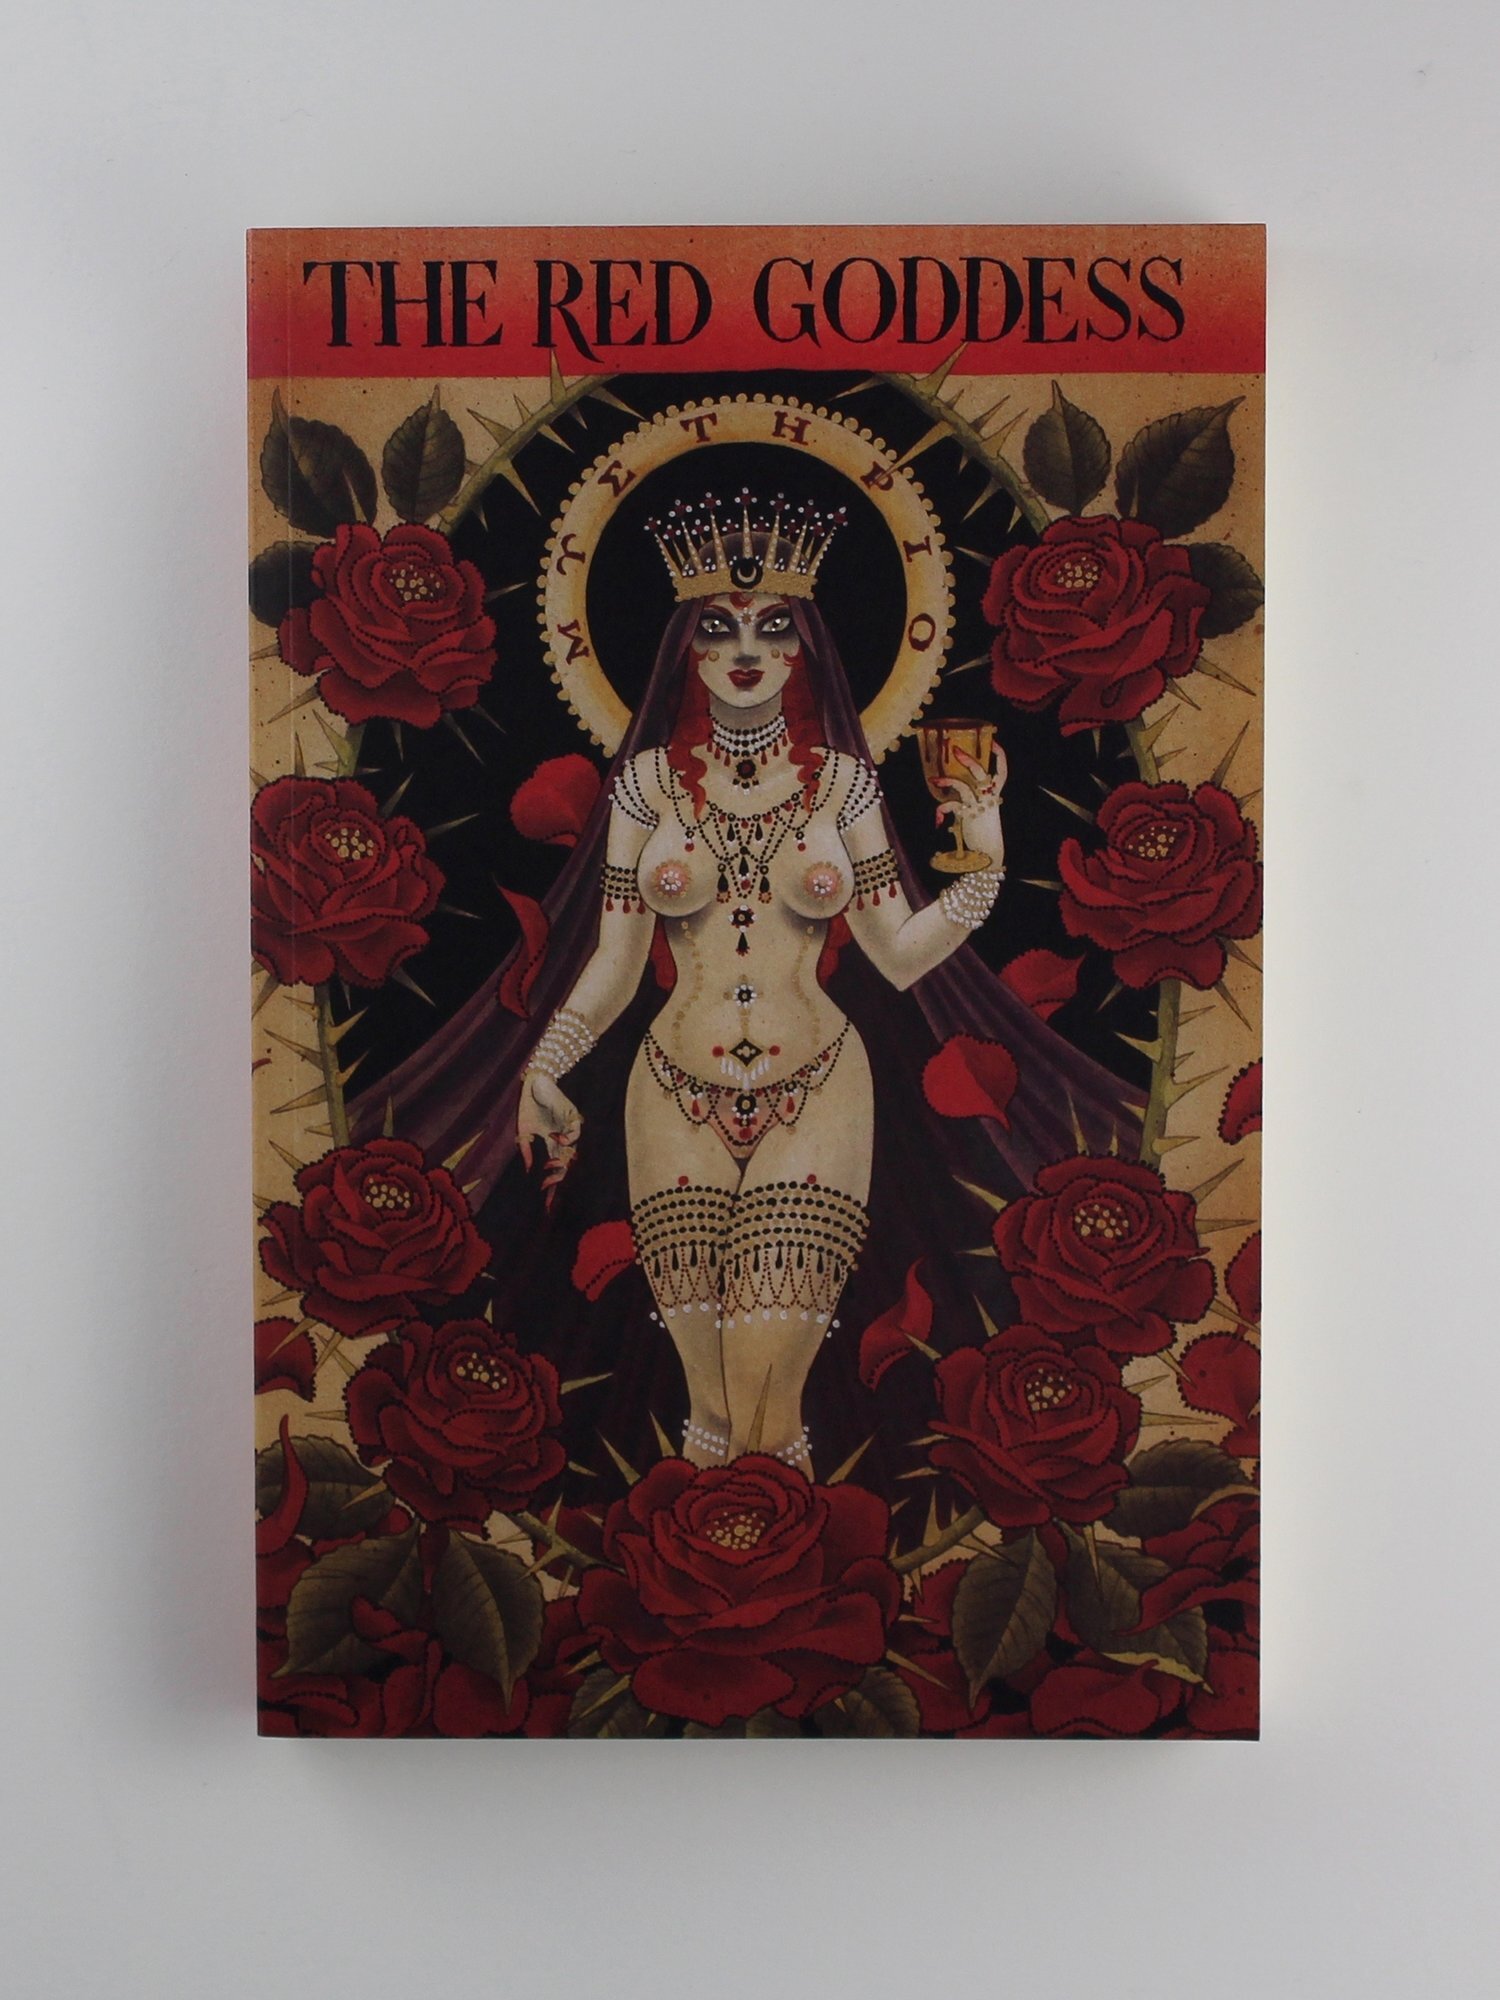 The red goddess